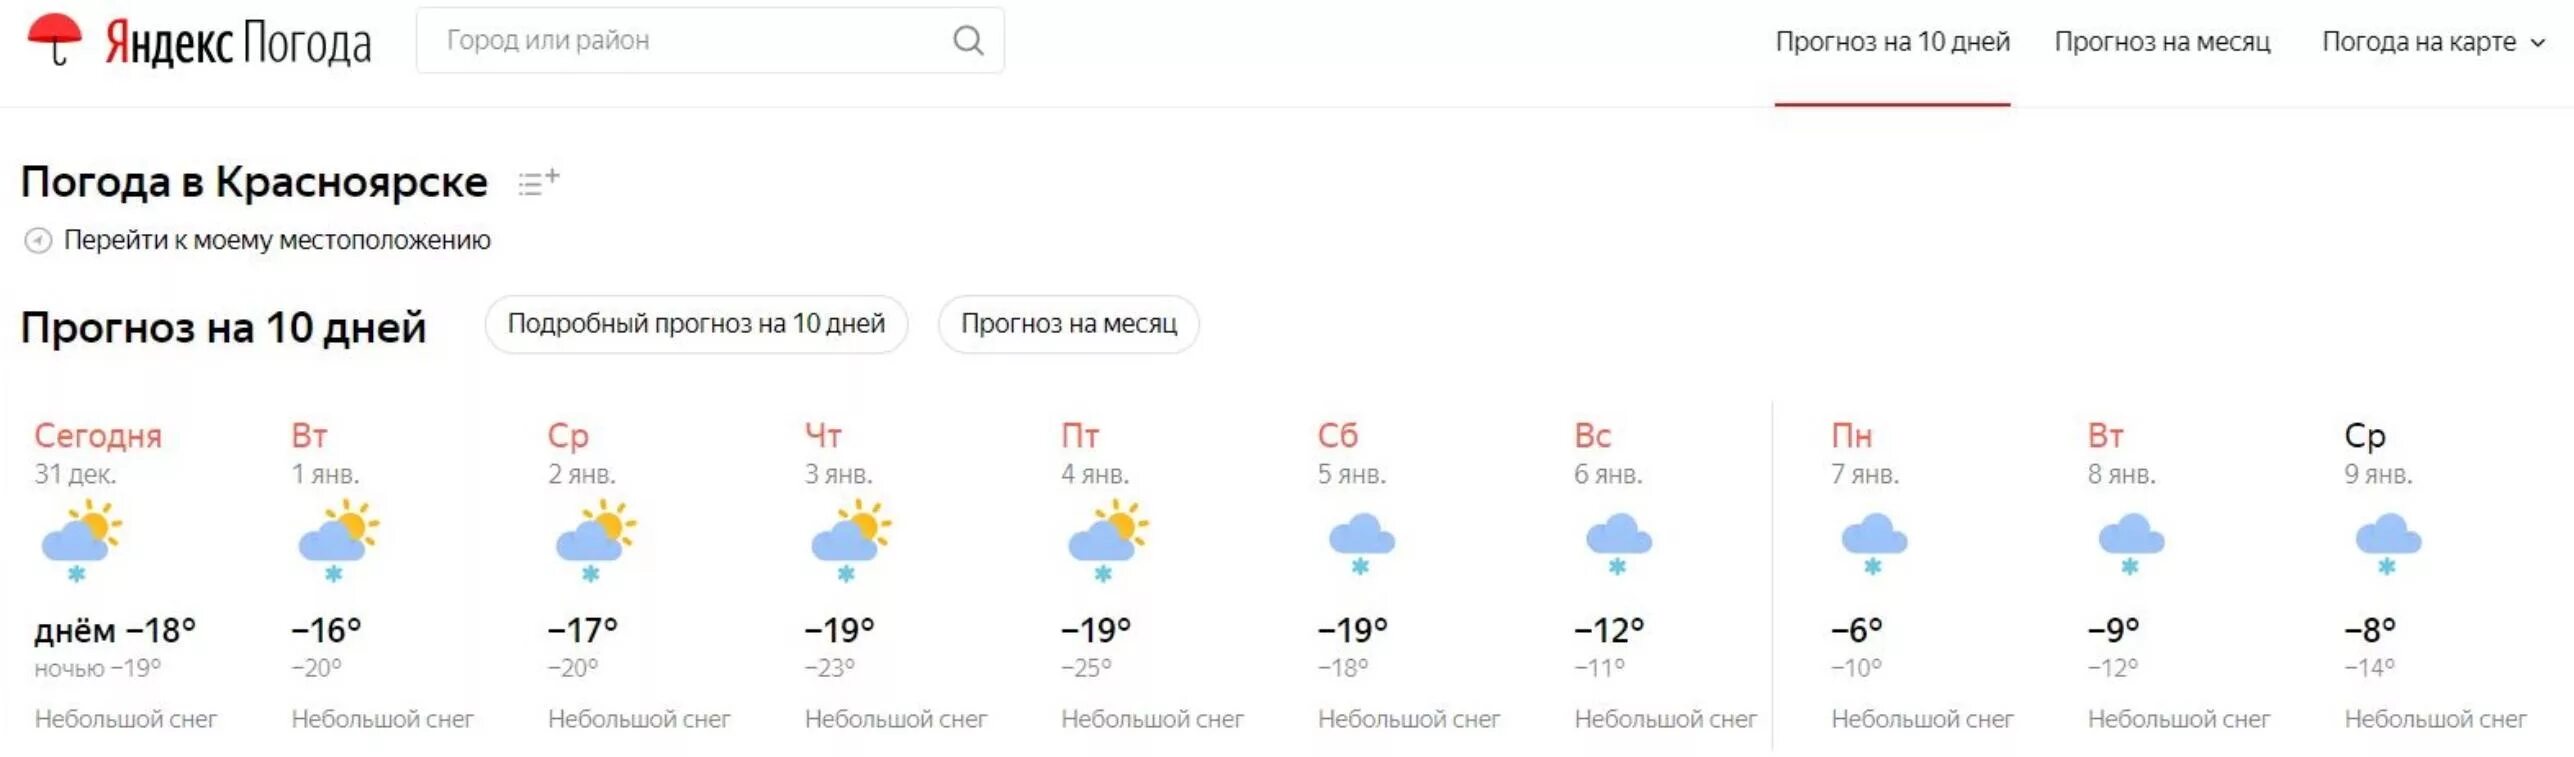 Прогноз на сегодня красноярск по часам. Погода в Красноярске. Погода в Красноярске на 14 дней. Погода в Красноярске на неделю. Погода в Красноярске на 10 дней.